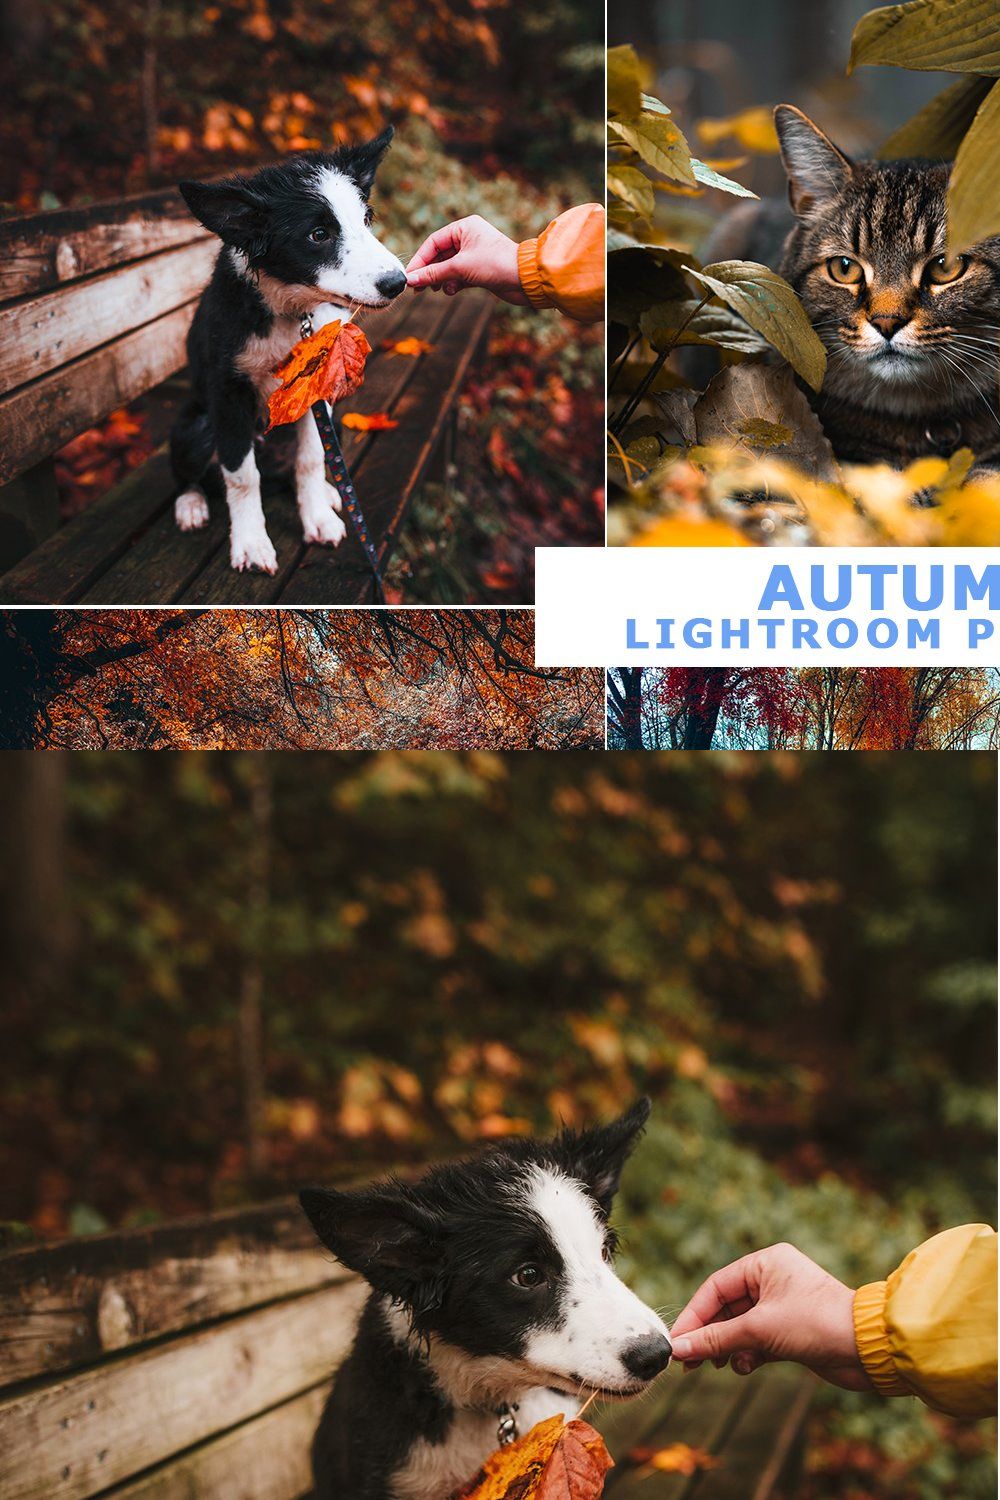 Autumn Lightroom Presets pinterest preview image.